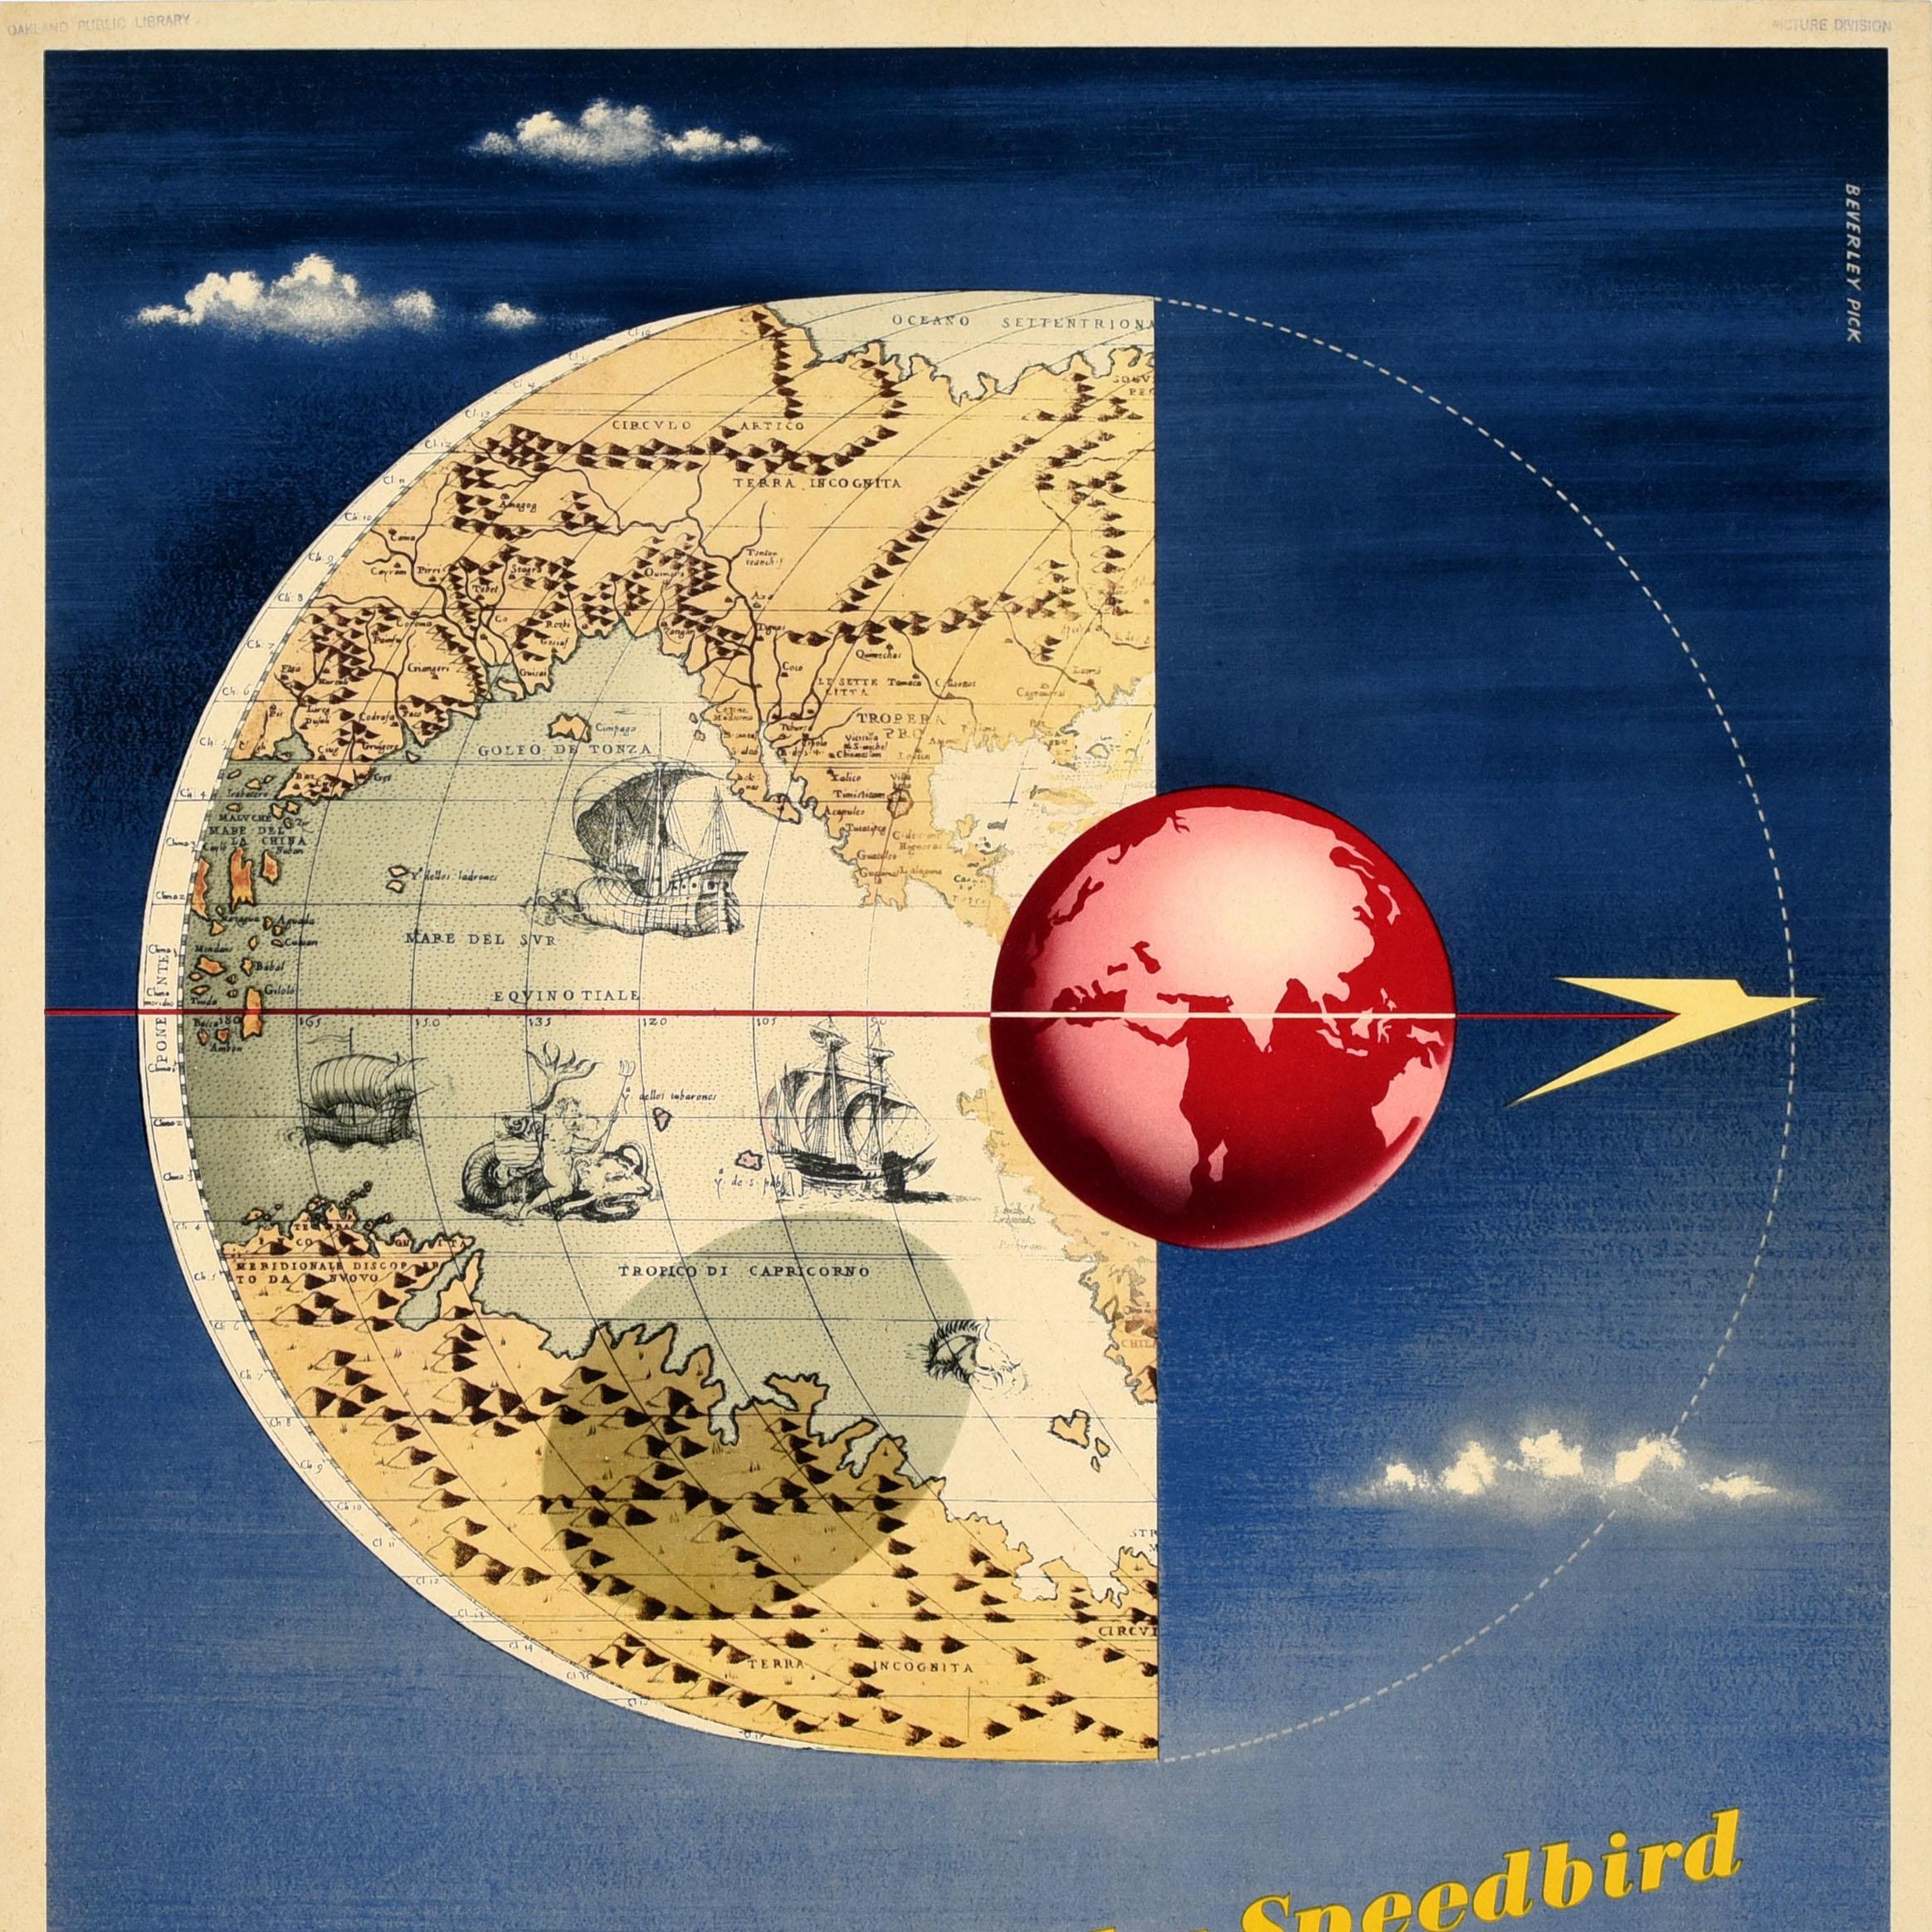 Britannique Original Vintage Travel Advertising Poster BOAC Smaller World By Speedbird 1950s en vente